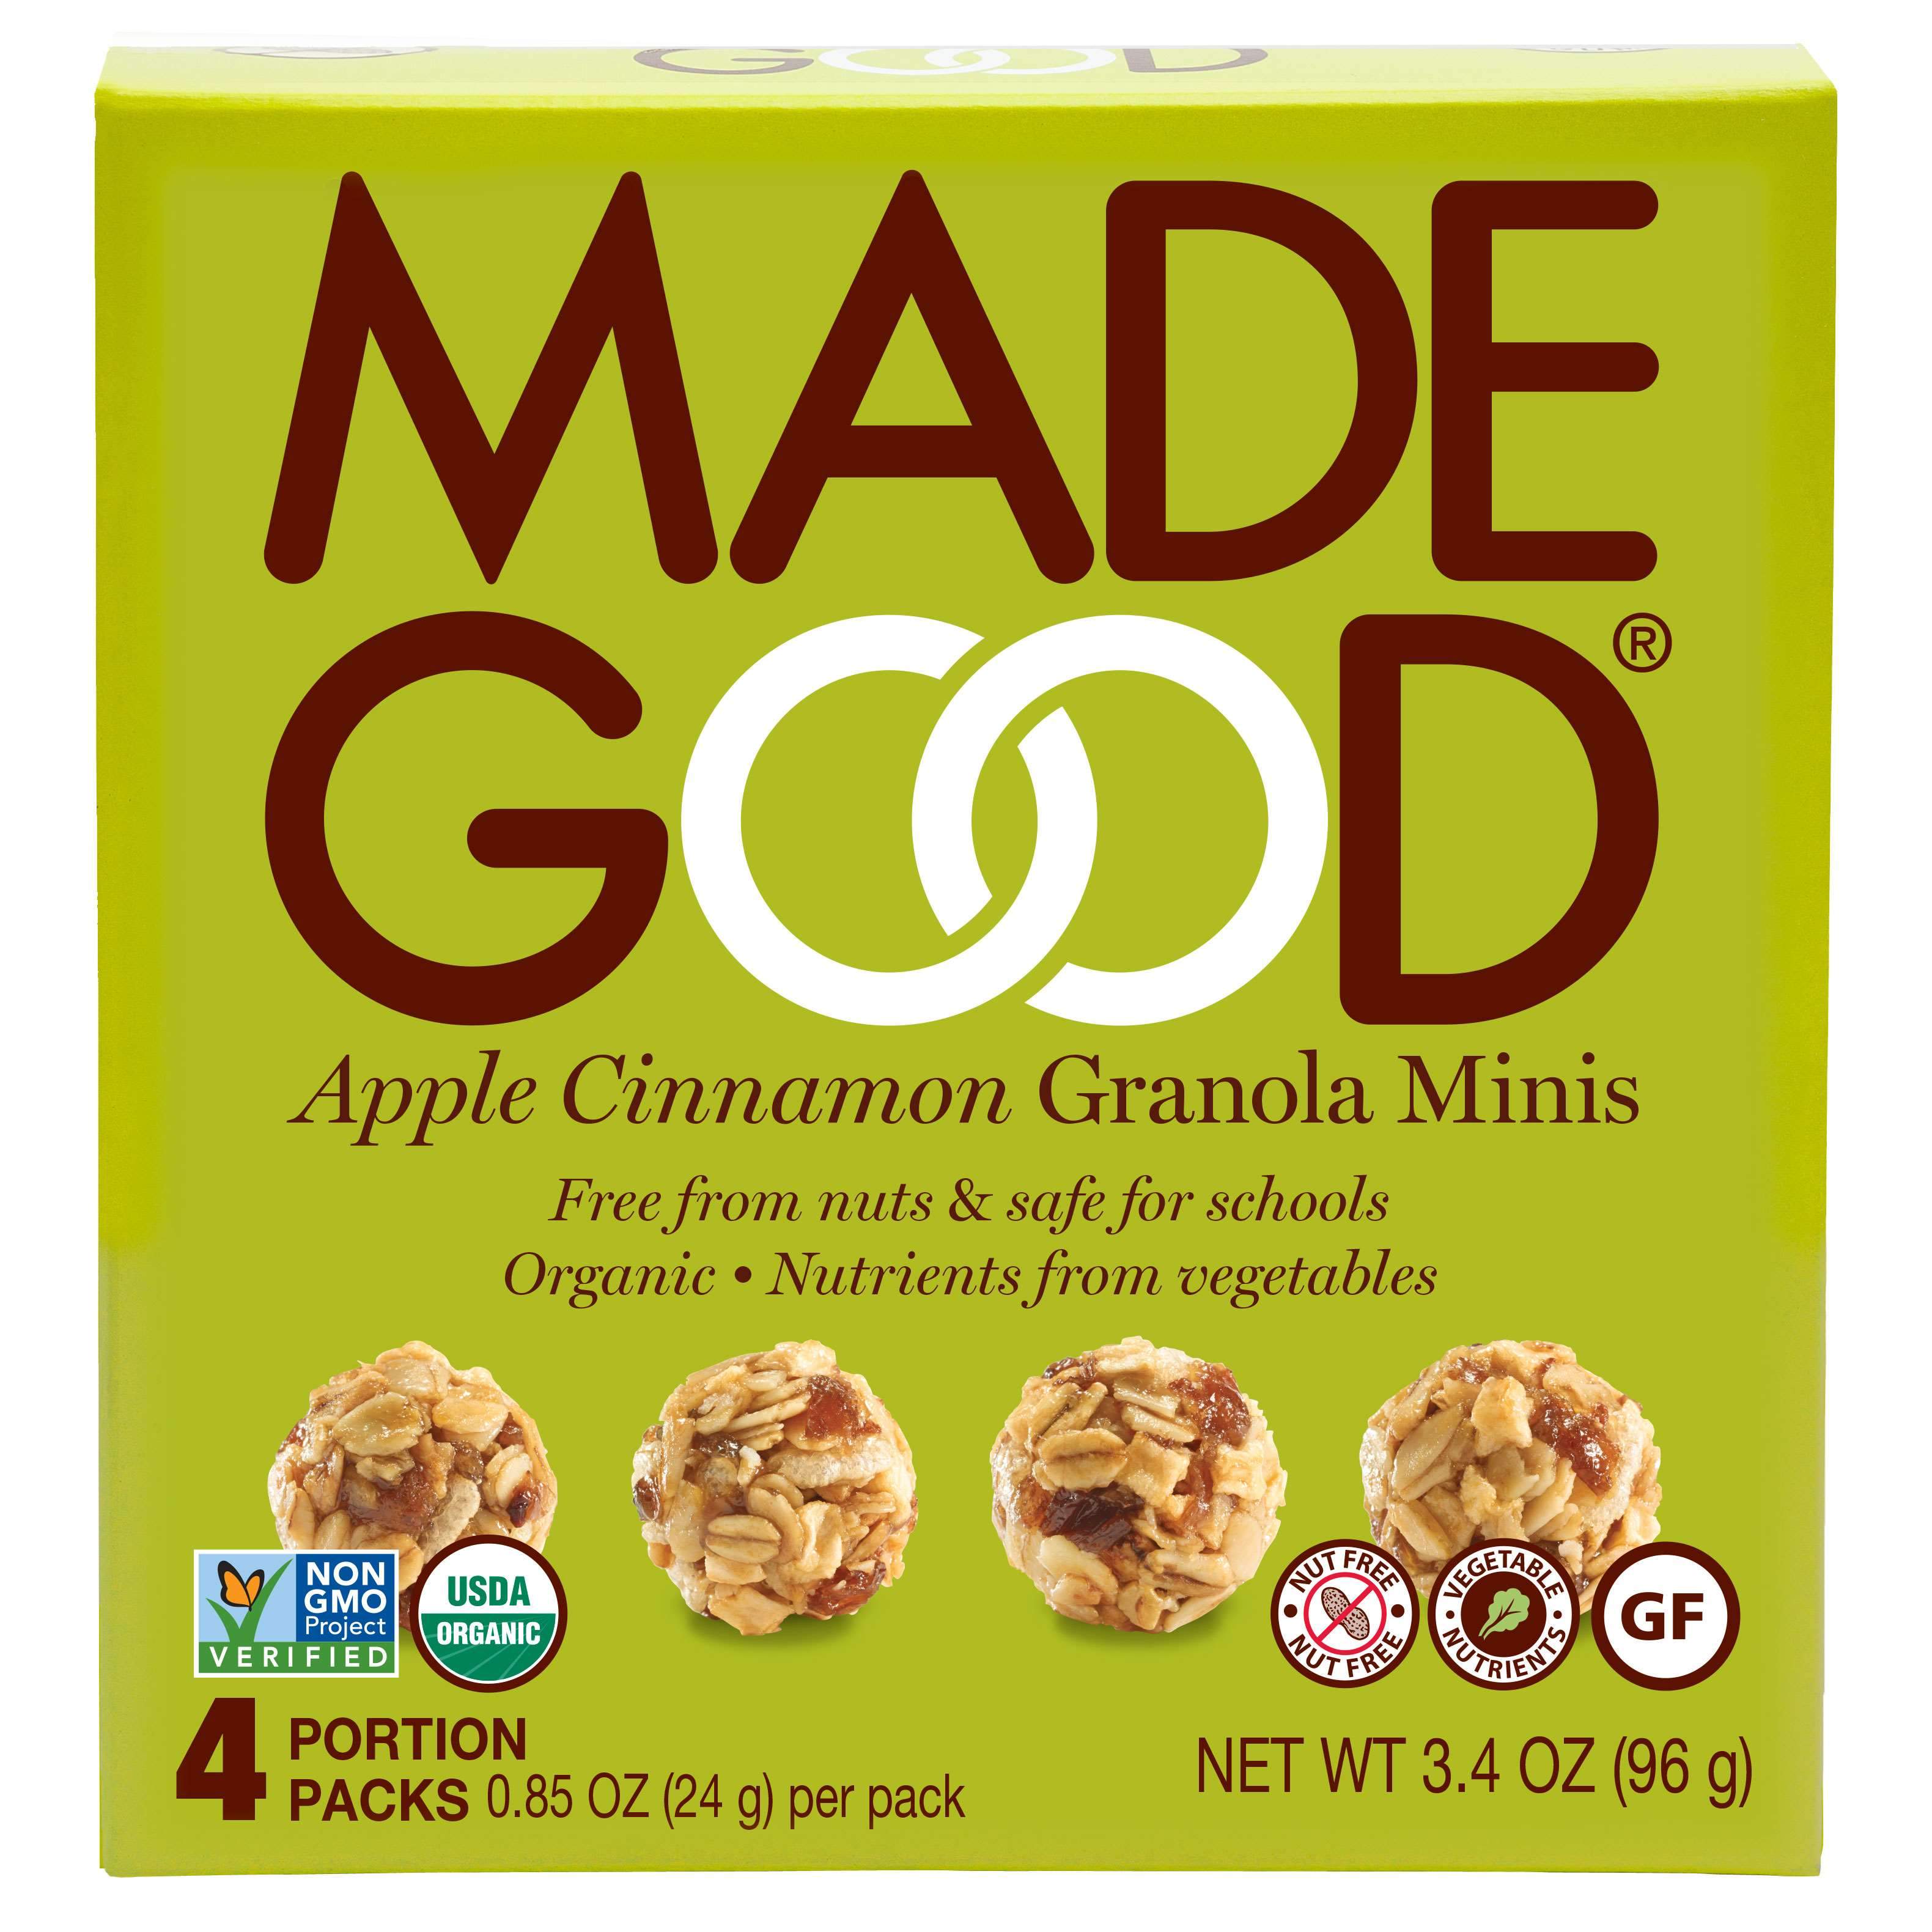 Made Good Granola Minis Made Good Foods Apple Cinnamon 0.85 Oz-4 Packs 